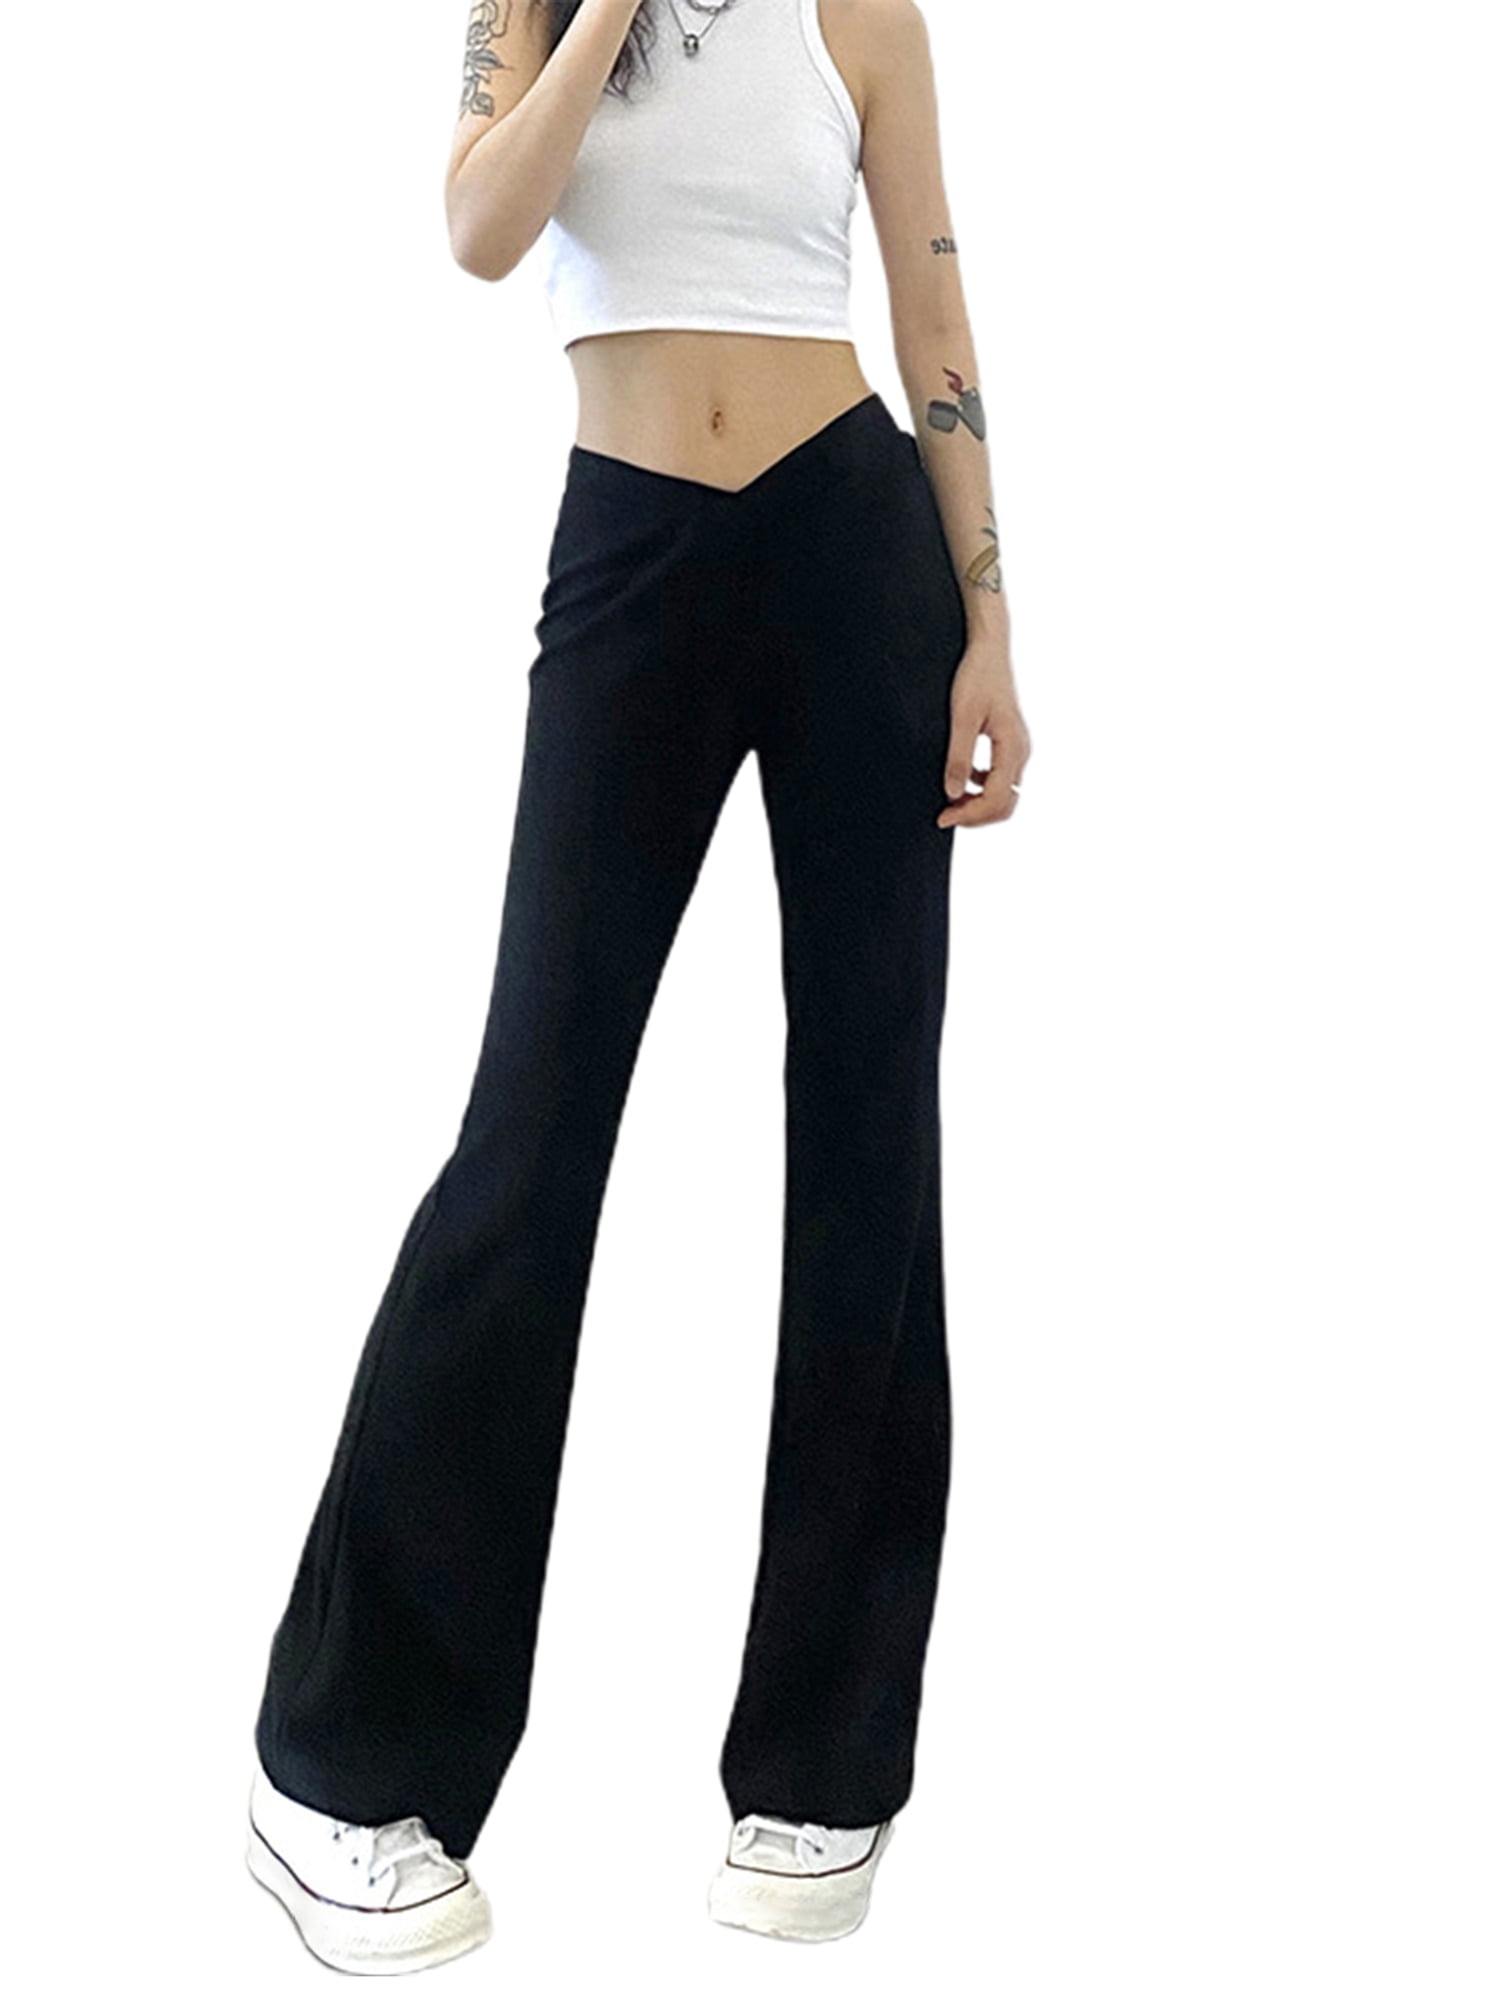 SAYOO Women Solid Color Flared Pants, Black V-shaped Low Waist